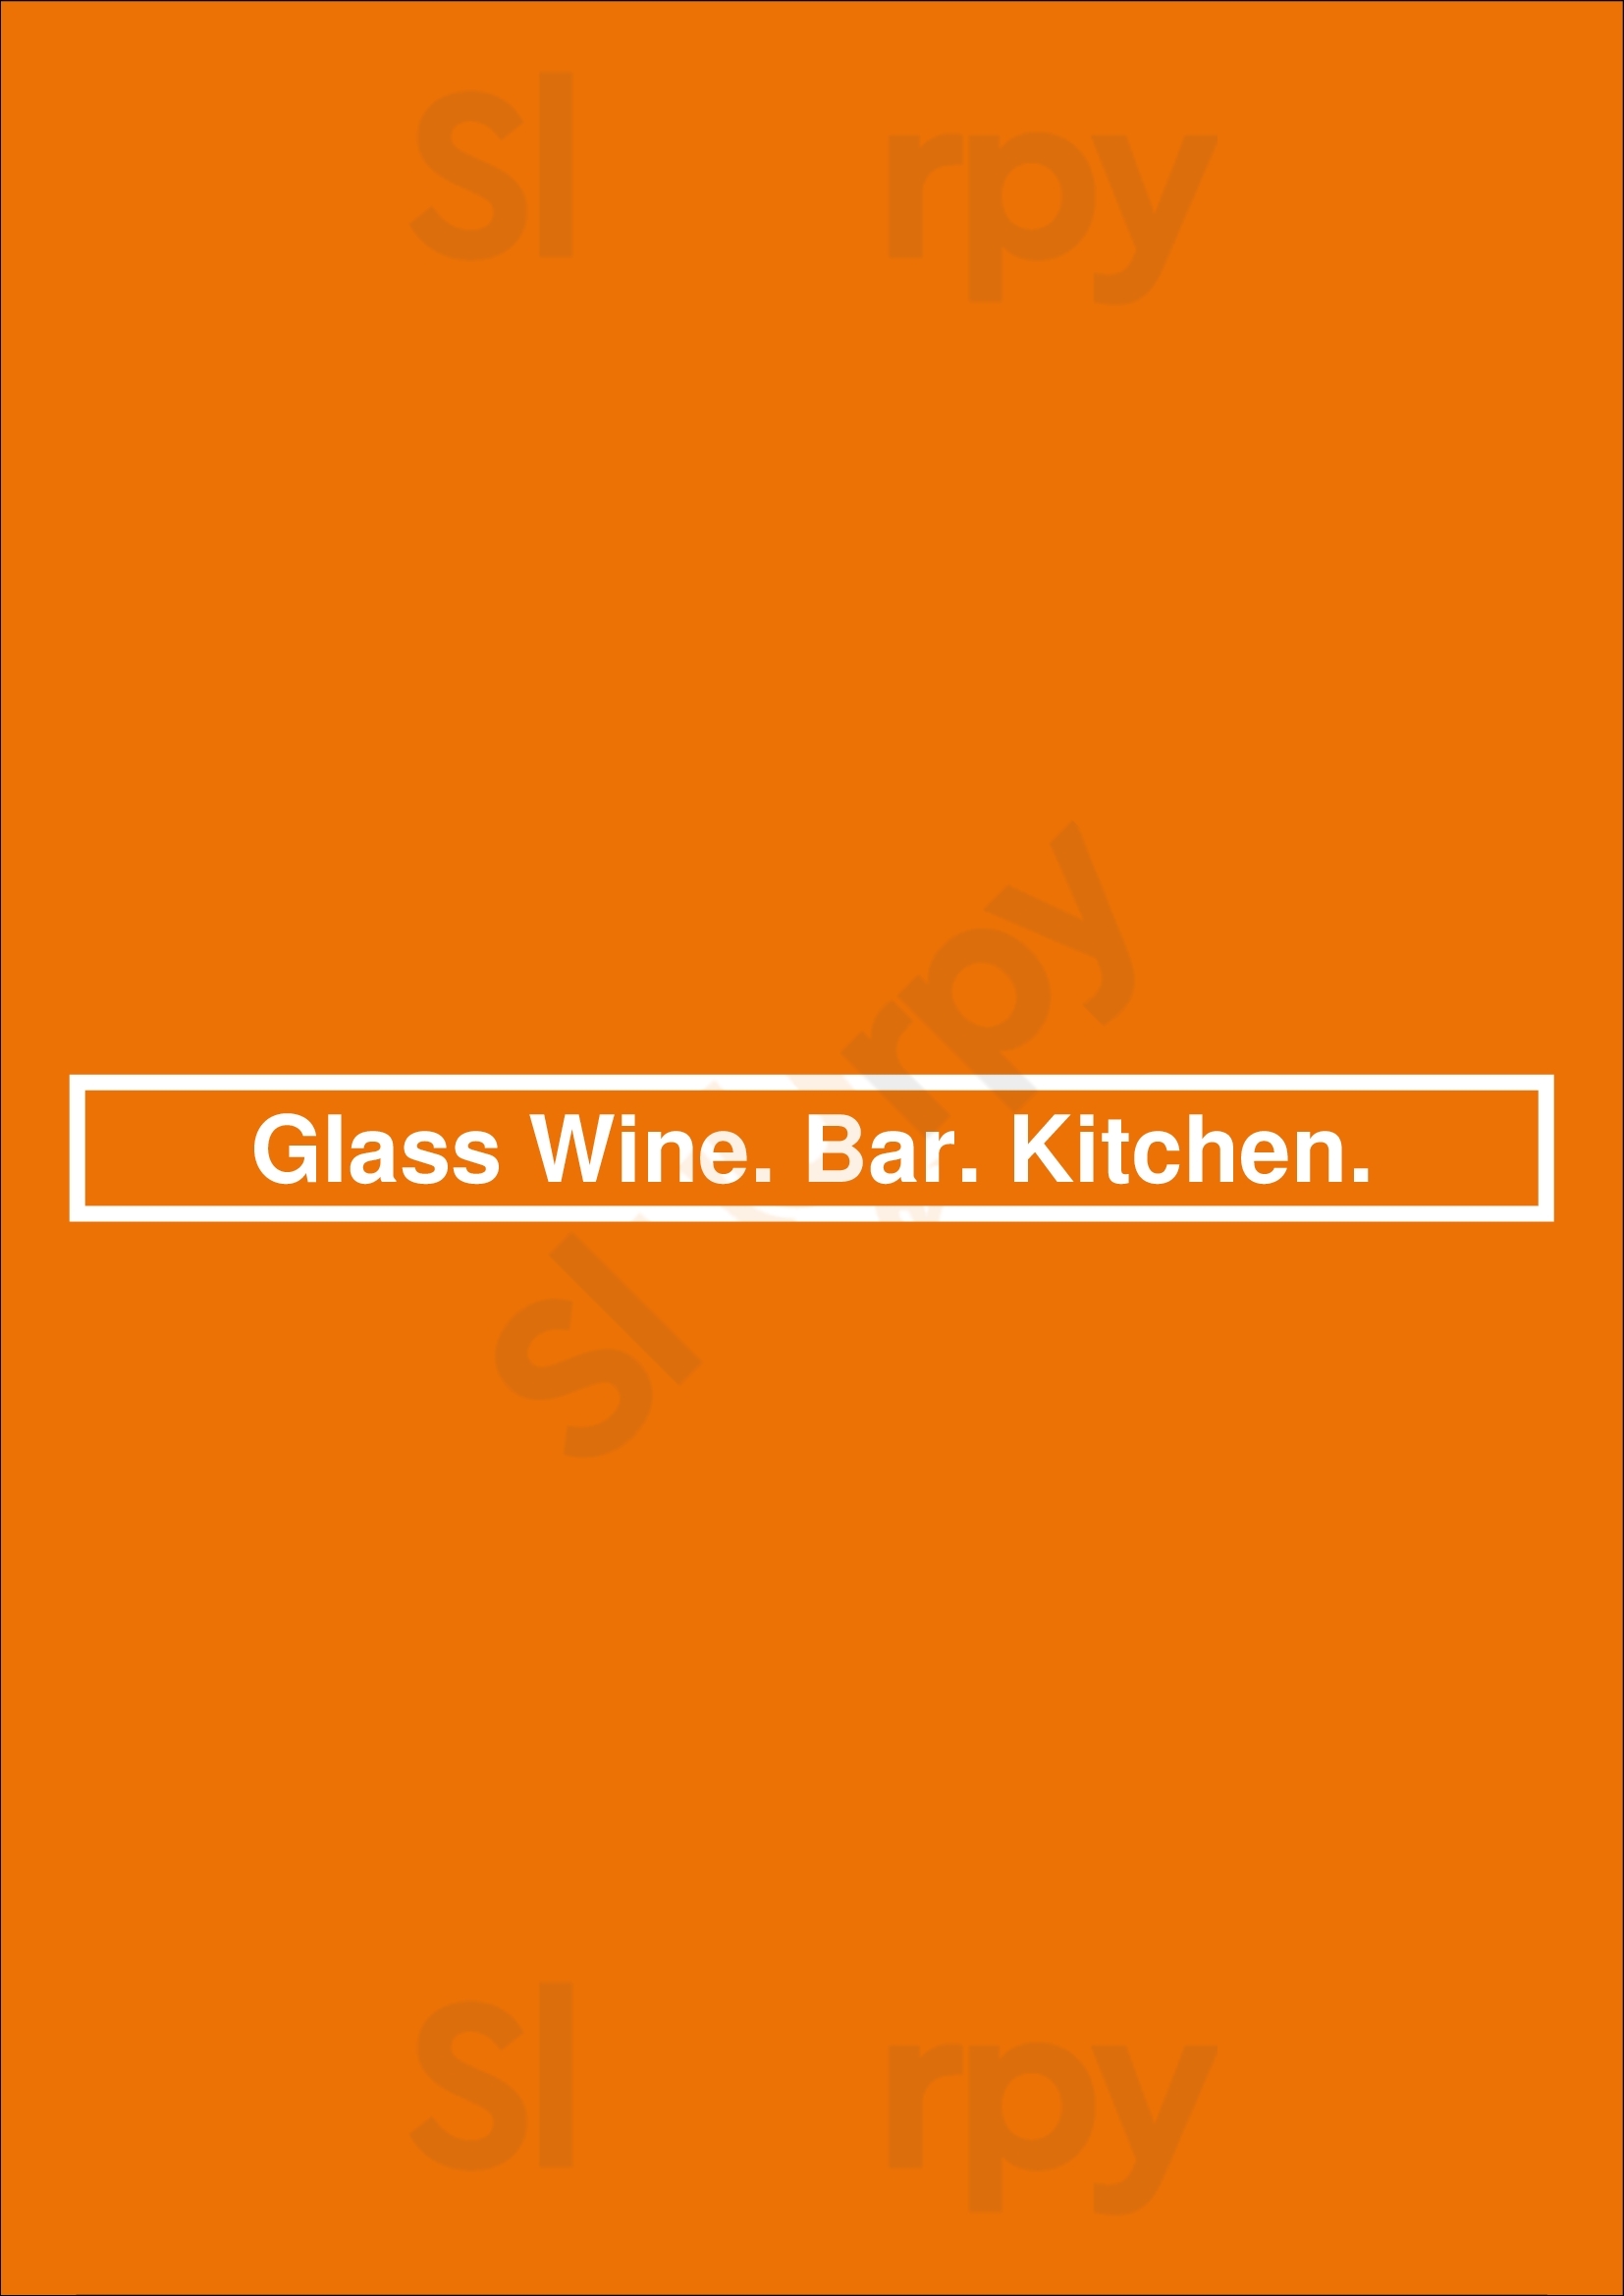 Glass Wine. Bar. Kitchen. Hawley Menu - 1